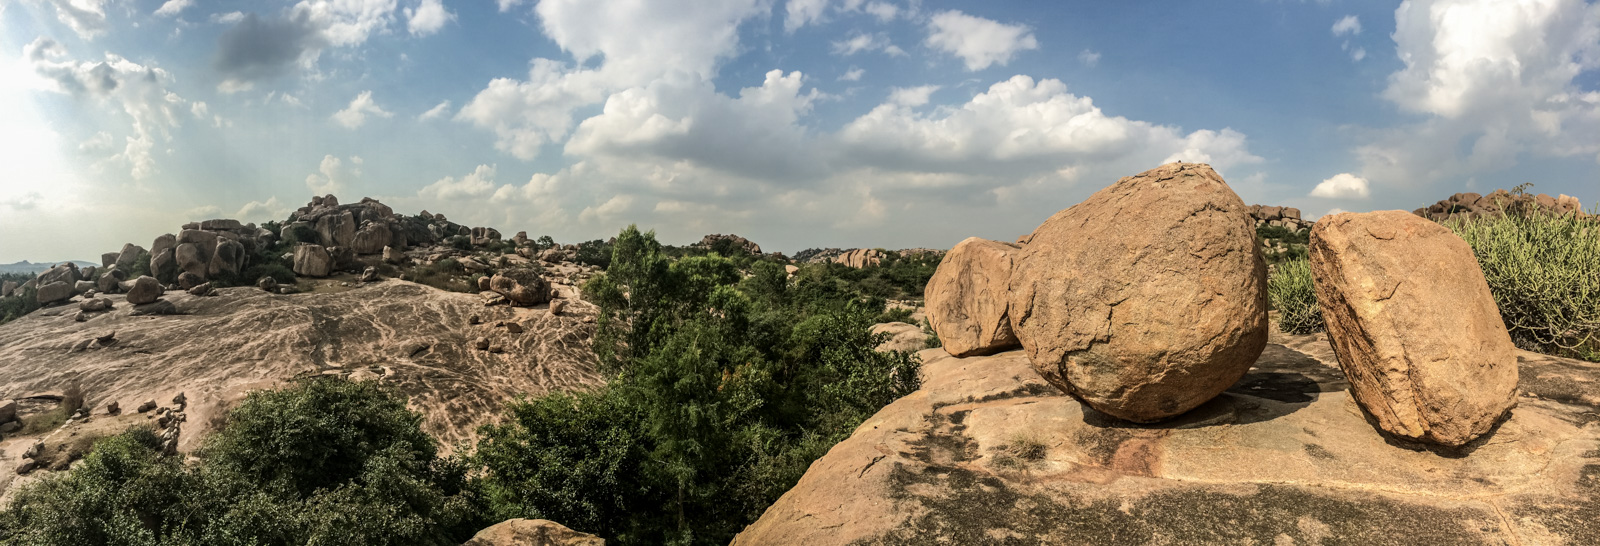 Hampi-India-bouldering-rockclimbing-AmyRolloPhoto-iphone-2671.jpg